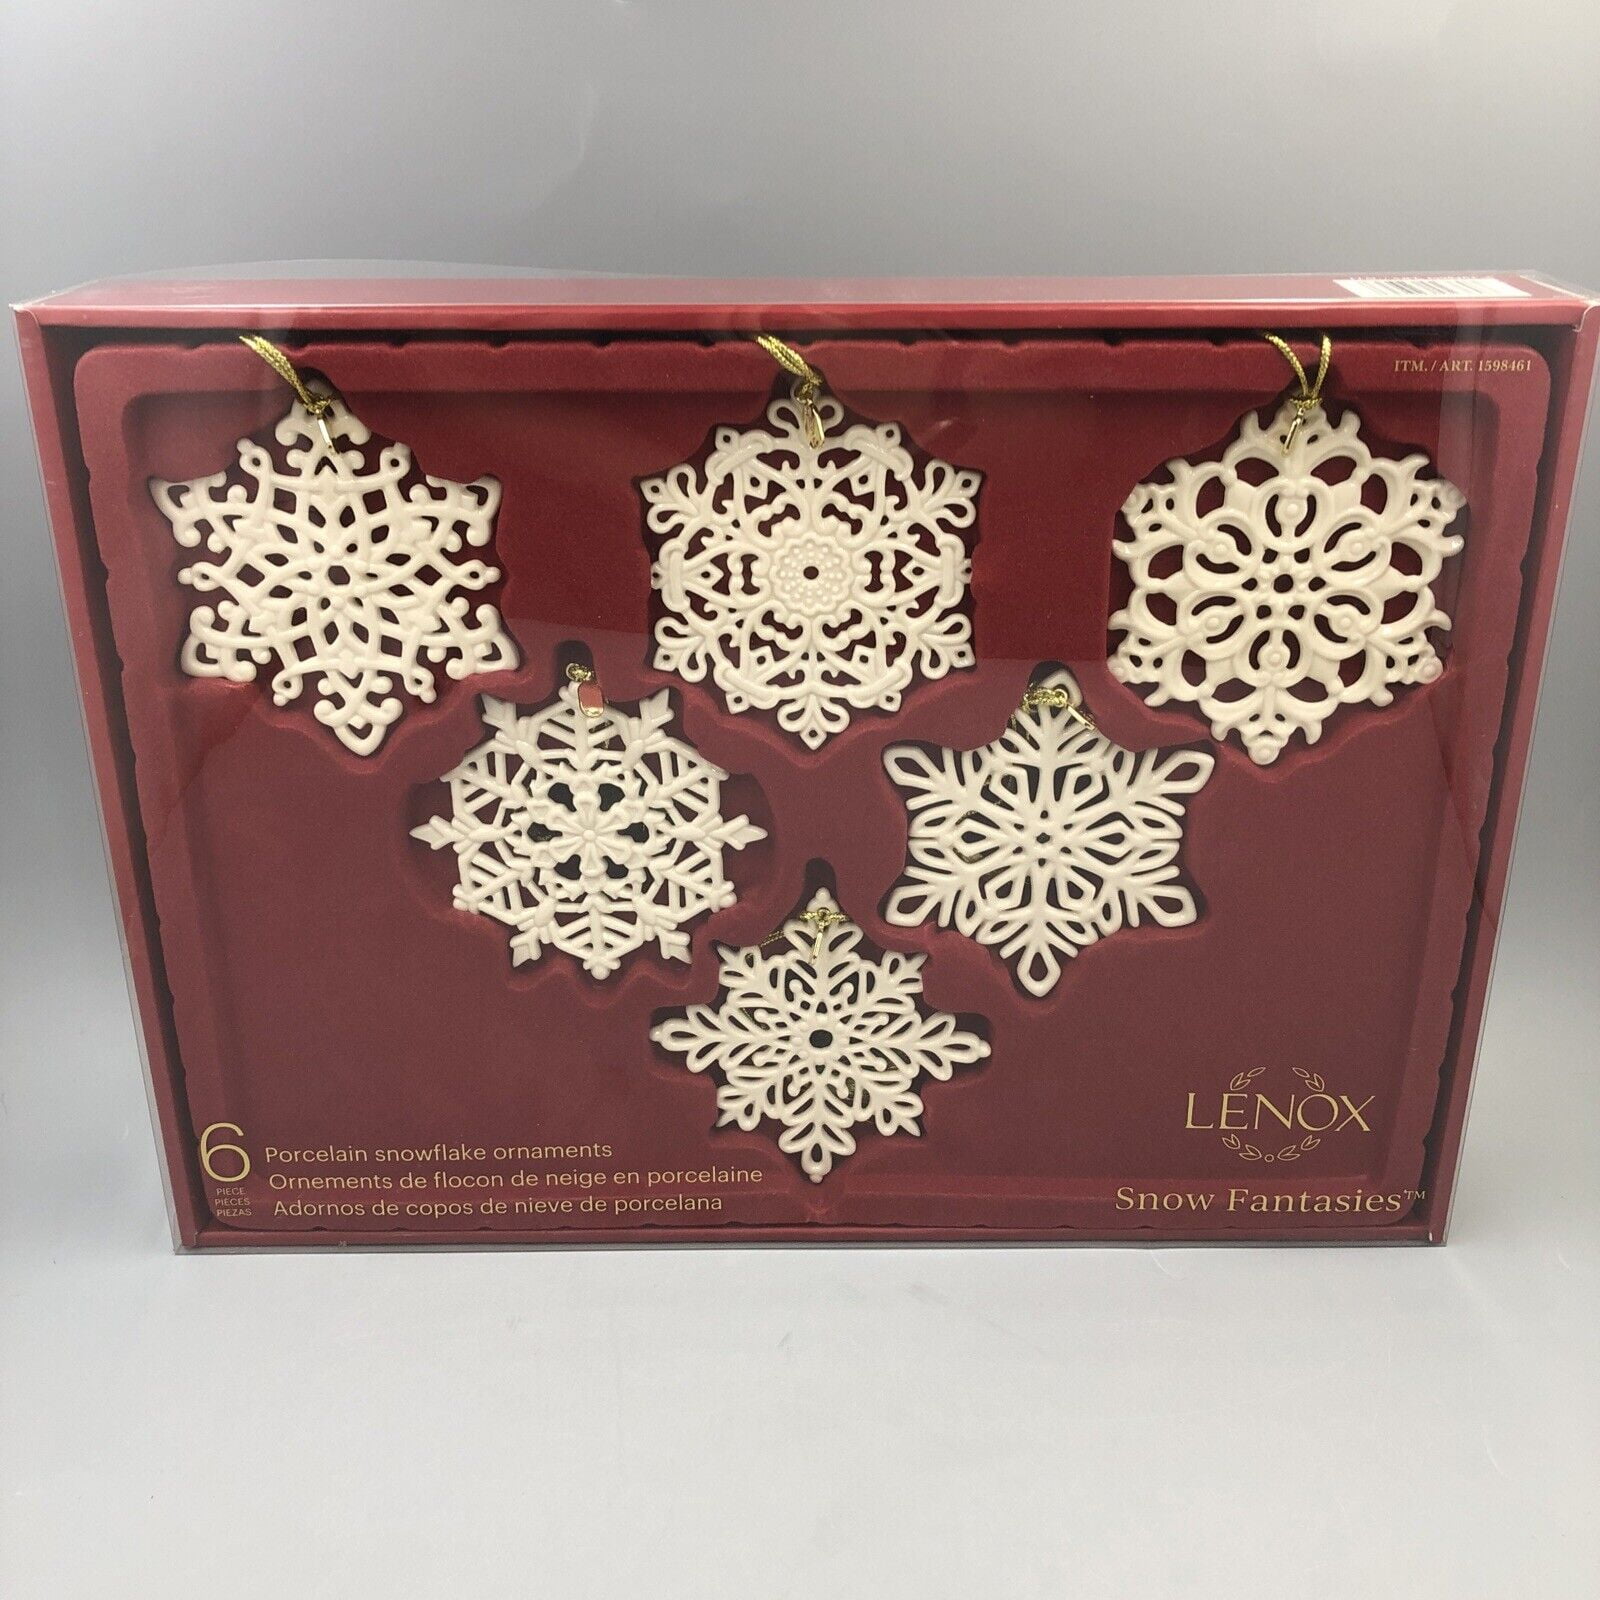 Mini Snowflake Ornaments - 4Pack – Doles Orchard Box Shop